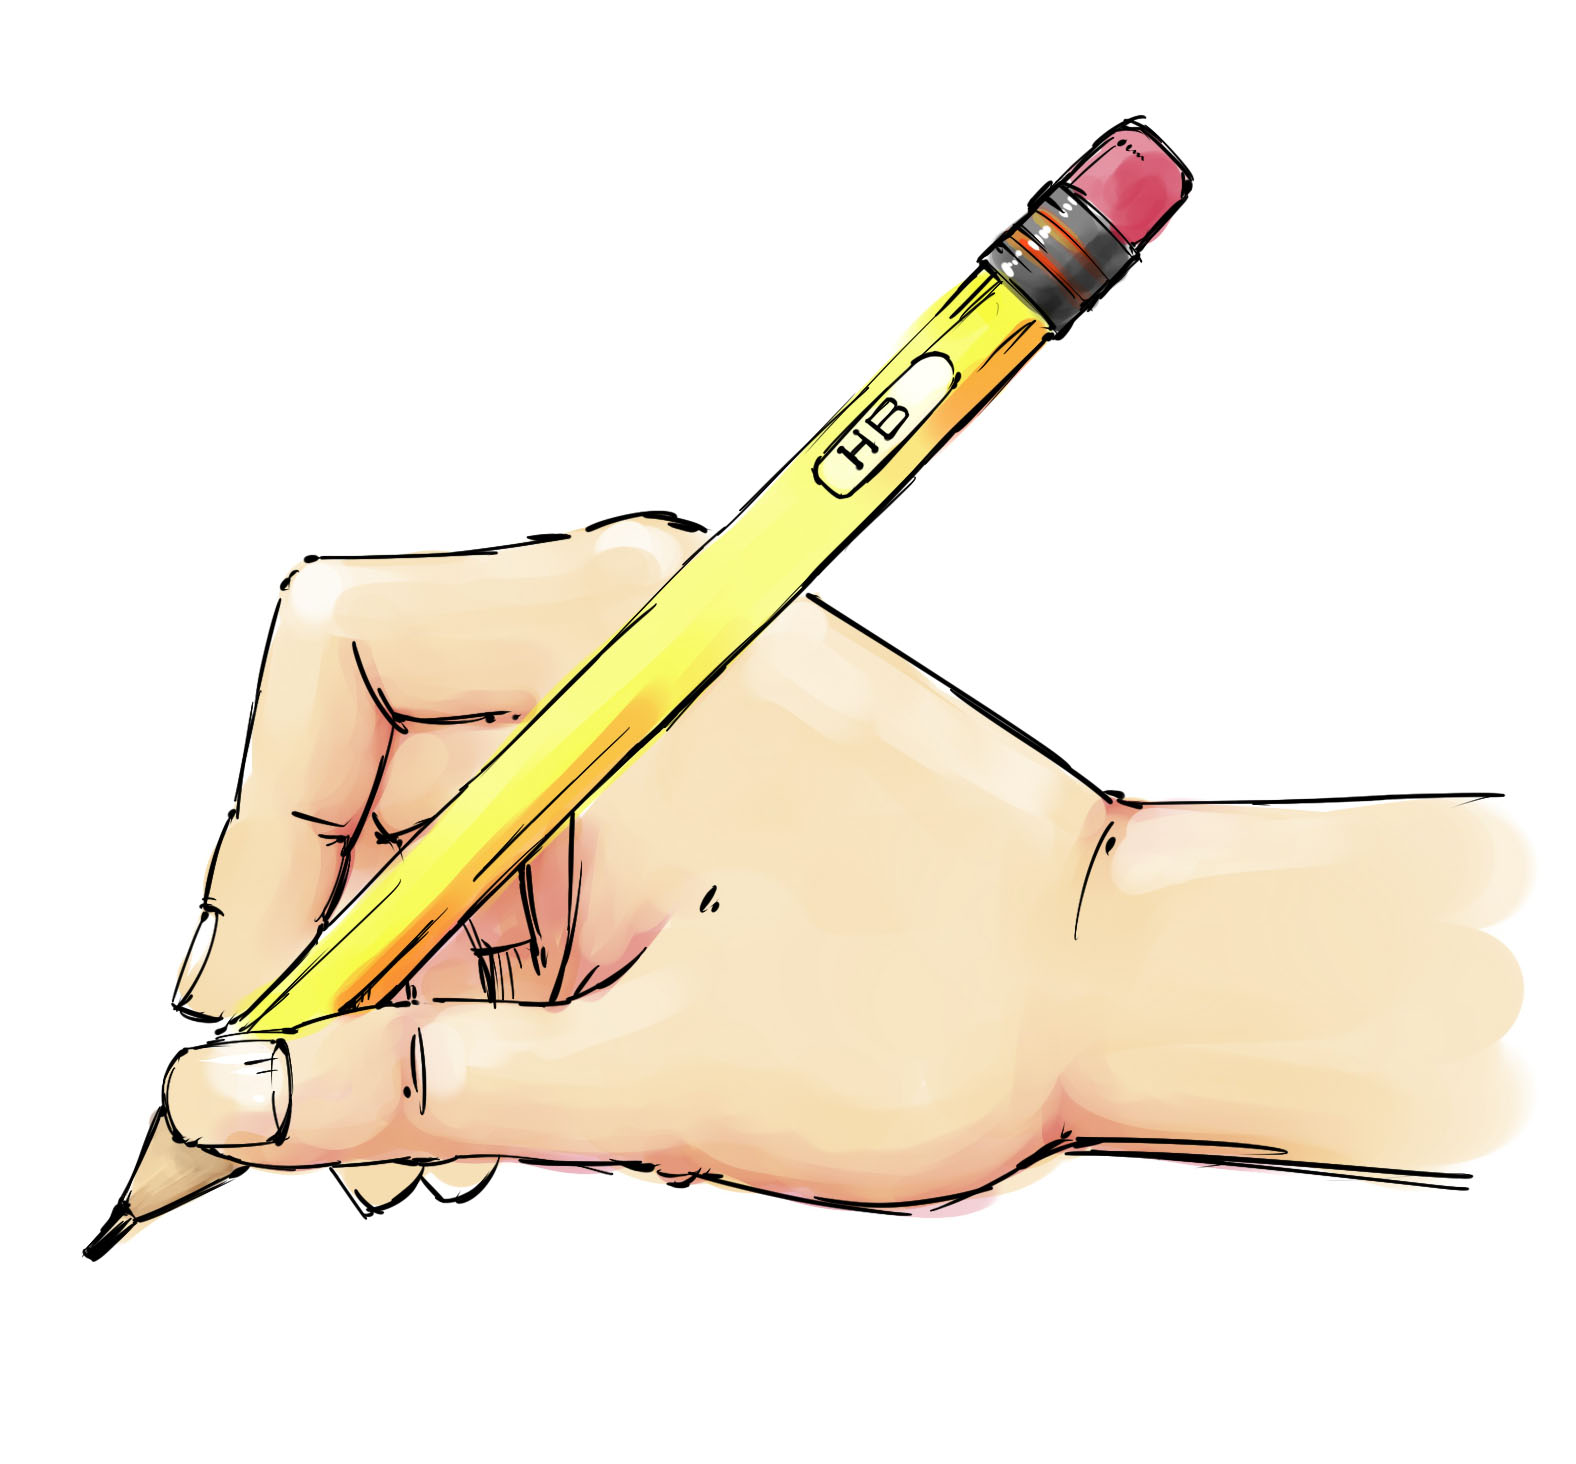 clipart writing grip